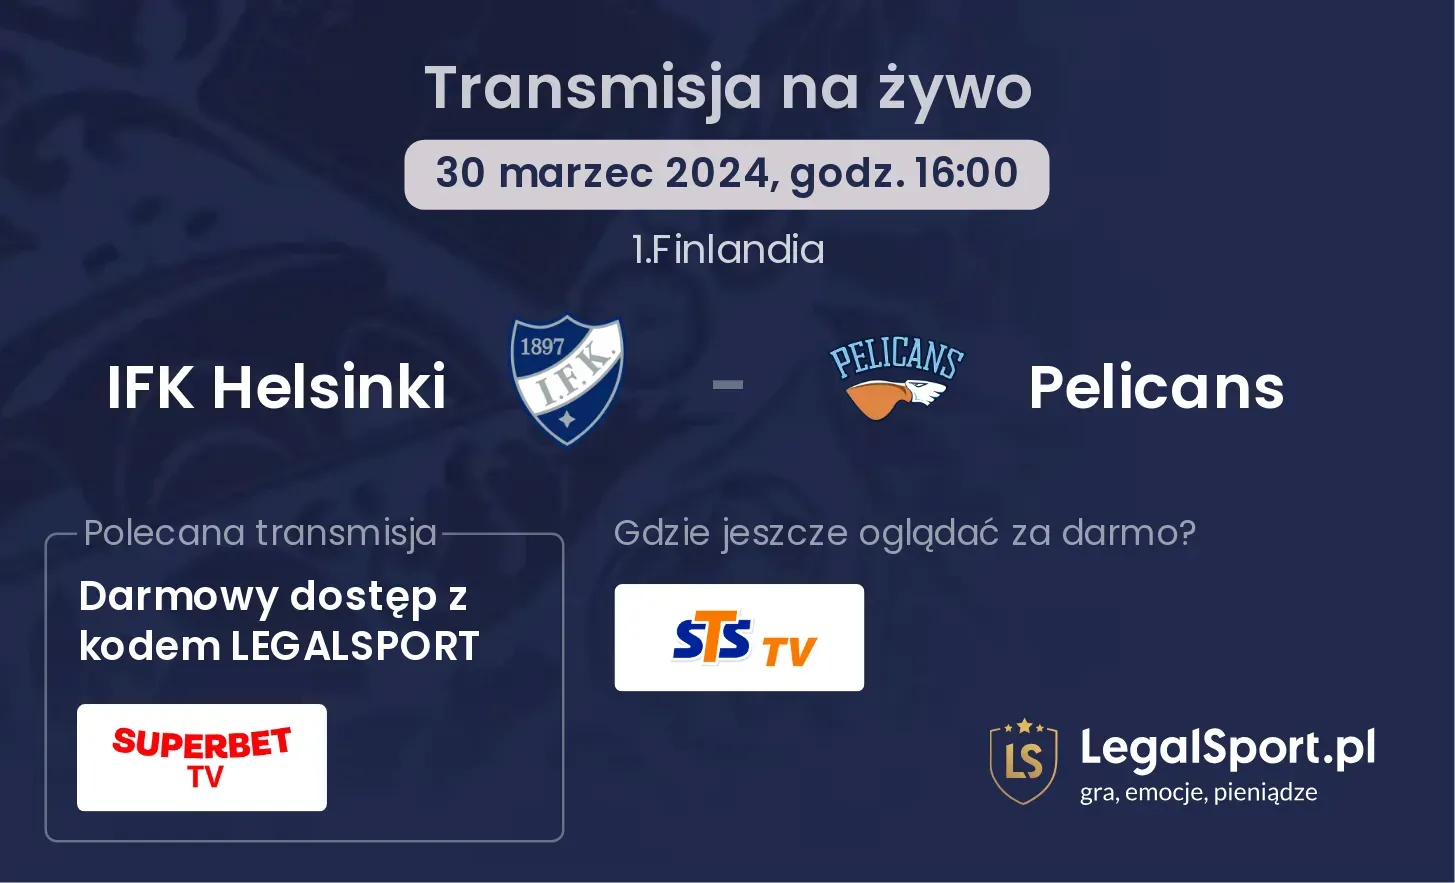 IFK Helsinki - Pelicans transmisja na żywo